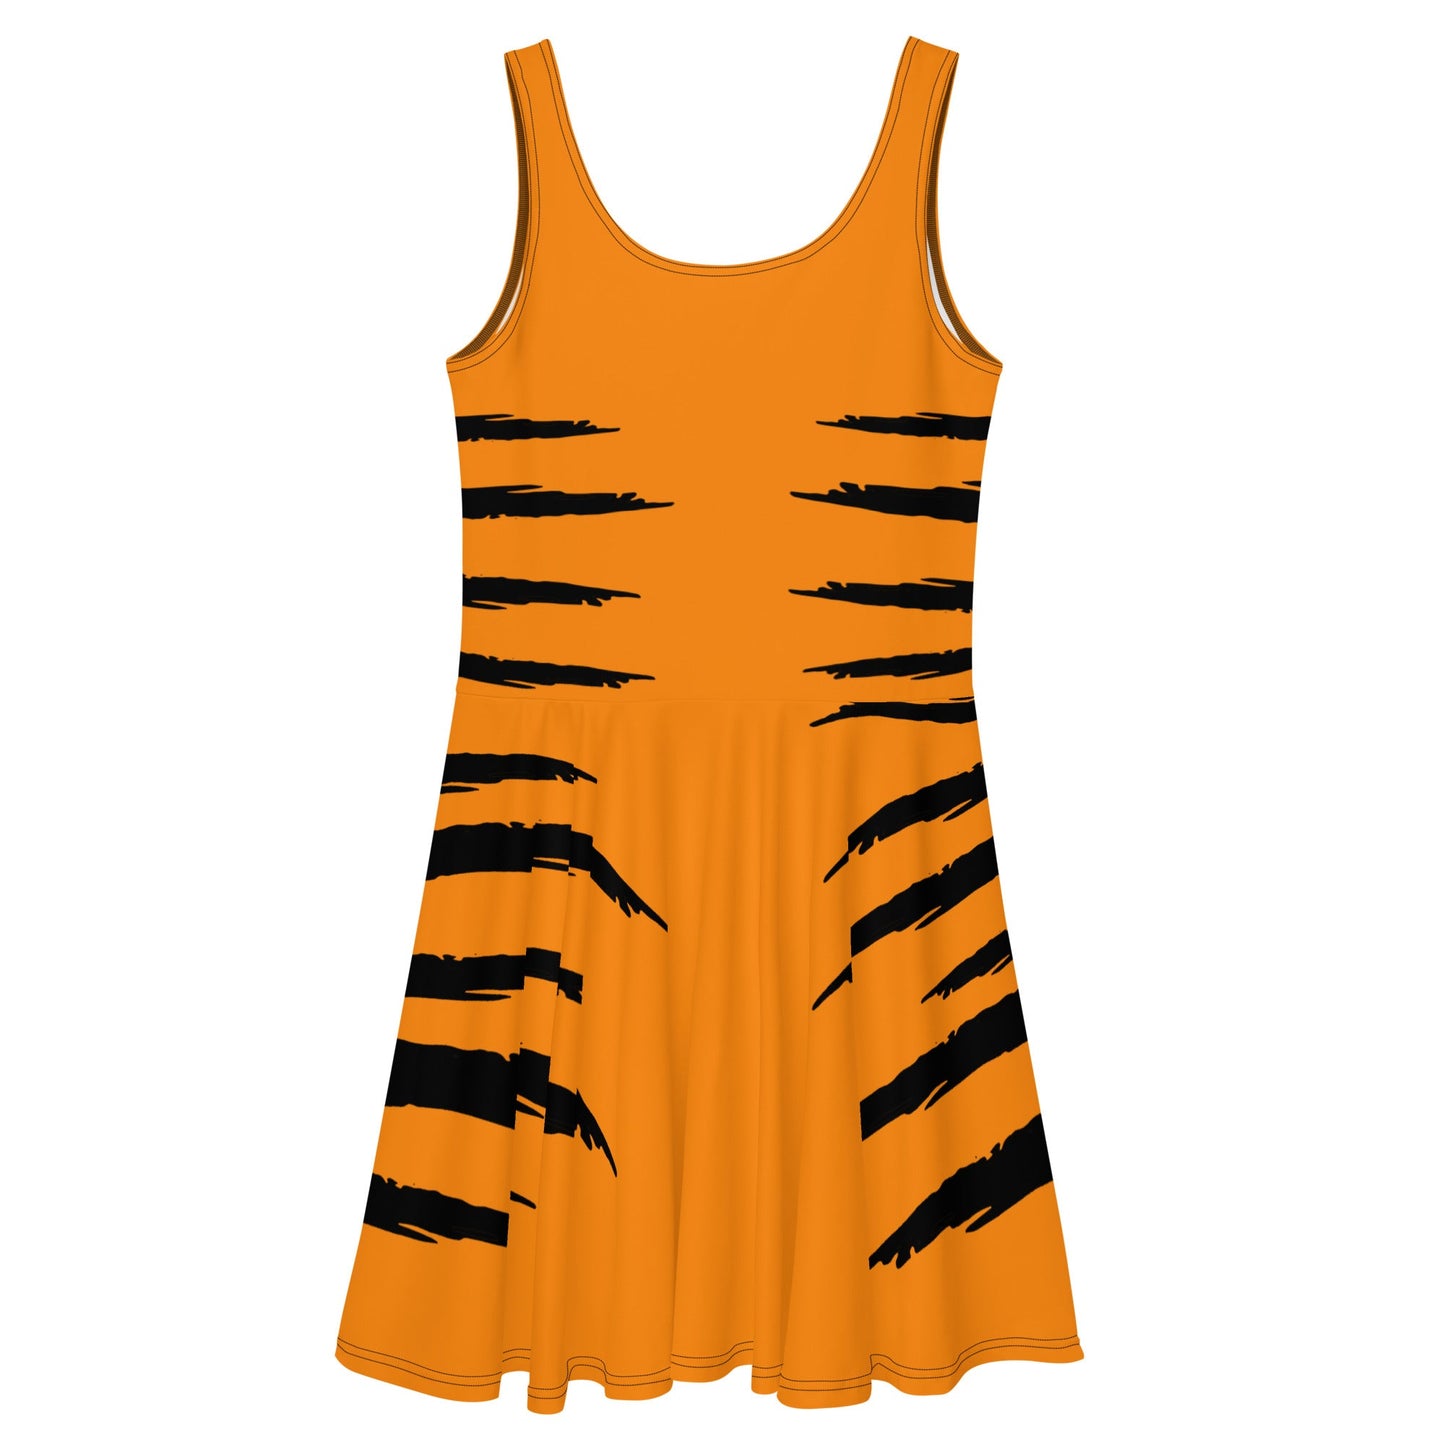 The Tigger Skater Dress 100 acre woodschristopher robinSkater DressWrong Lever Clothing